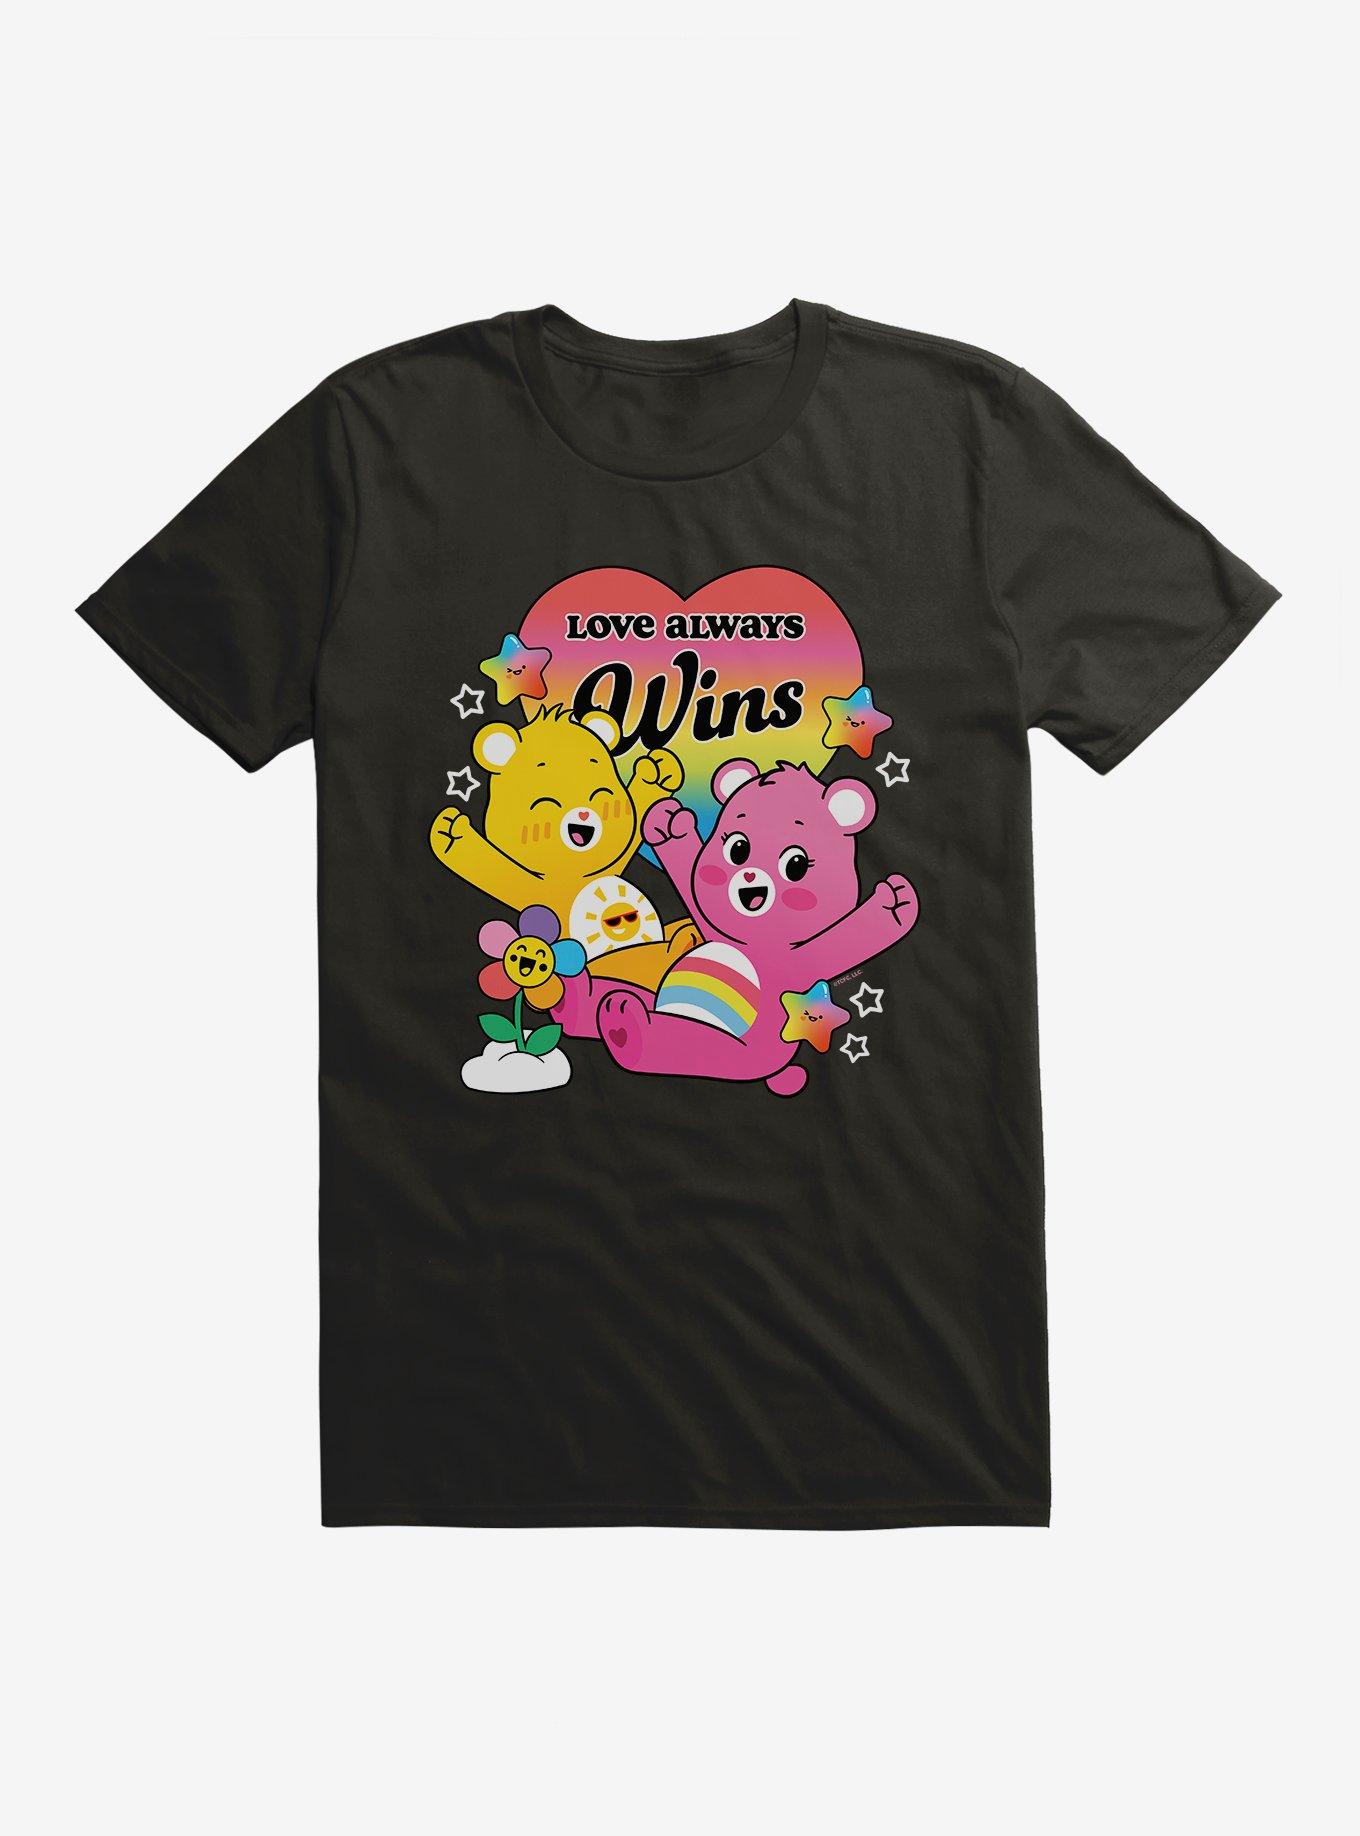 Care Bears Love Always Wins T-Shirt